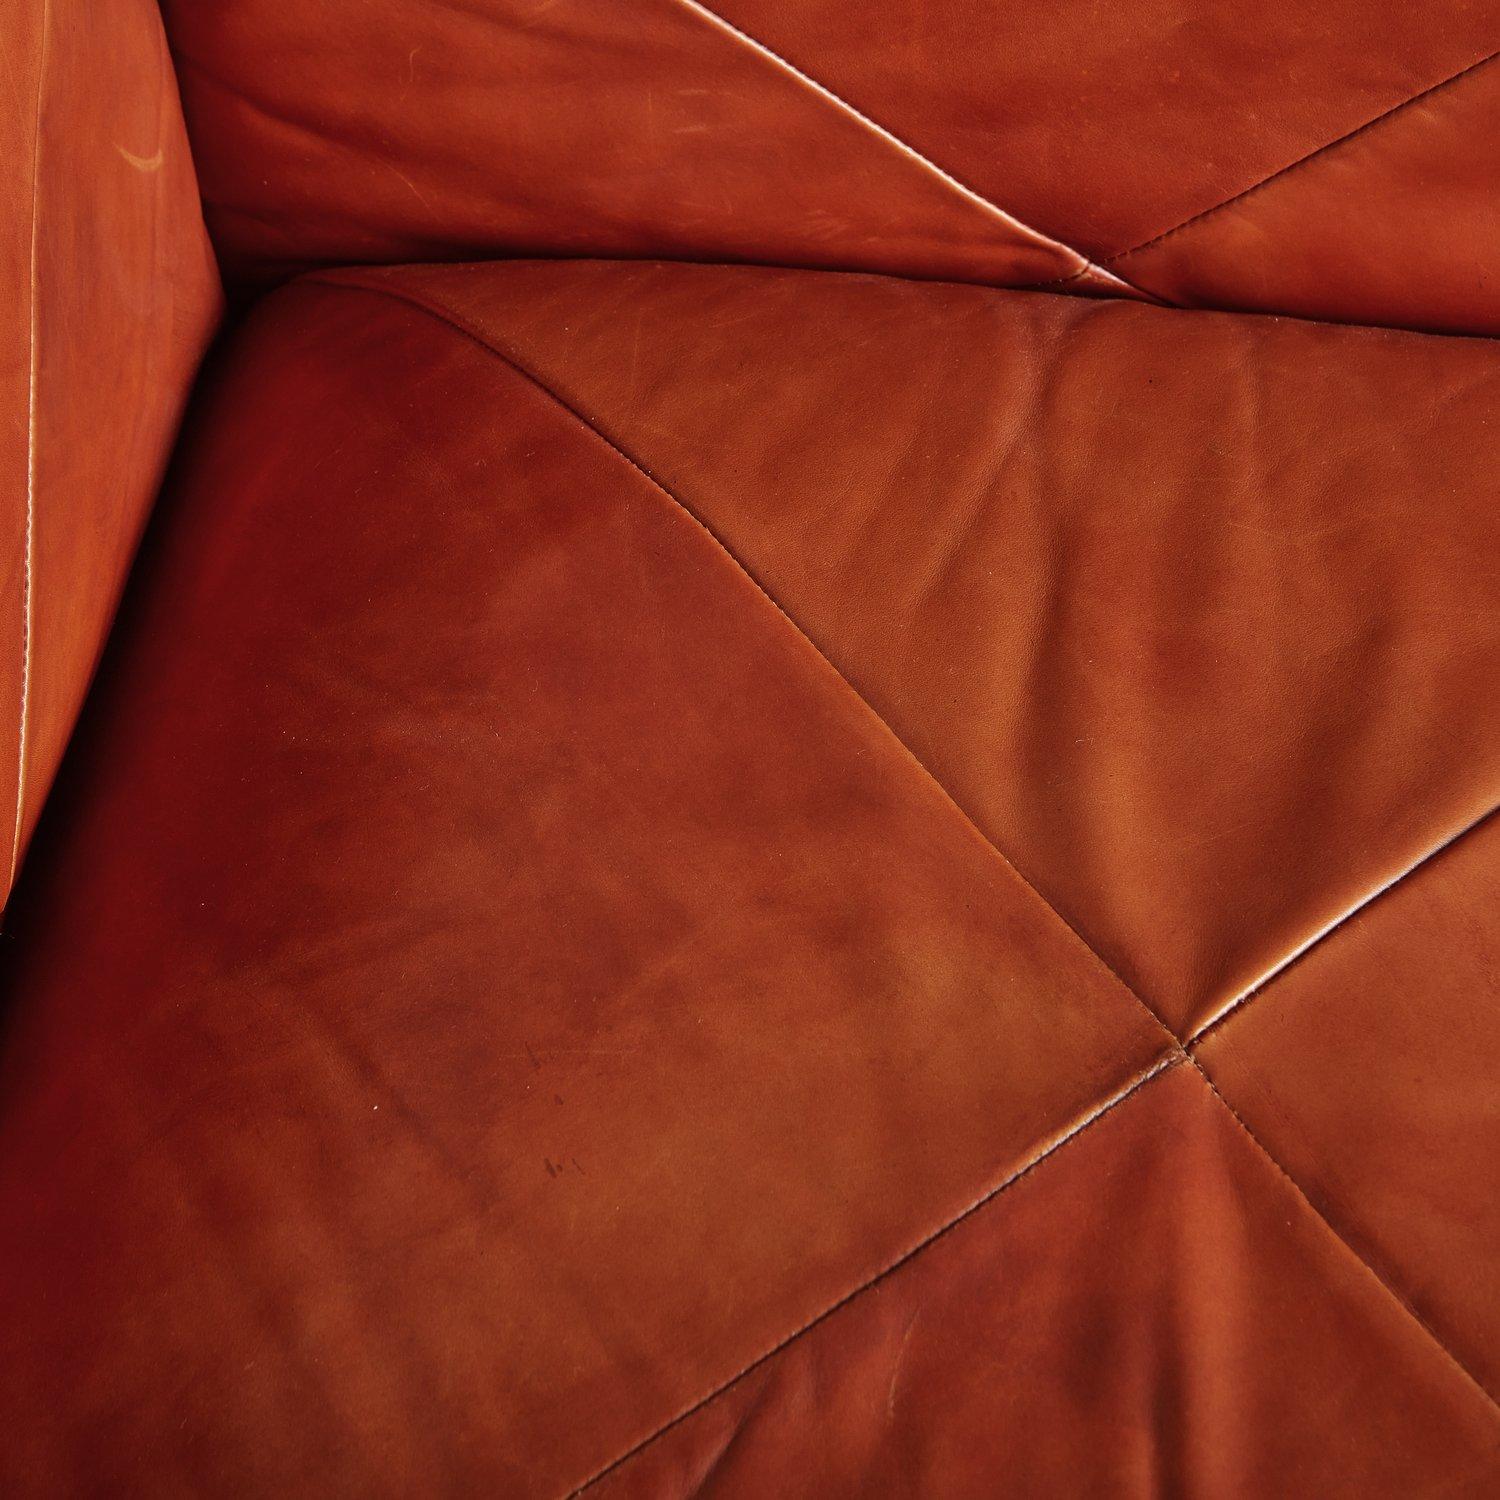 Marenco Sofa in Original Cognac Leather by Mario Marenco for Arflex, Italy 1970s For Sale 6